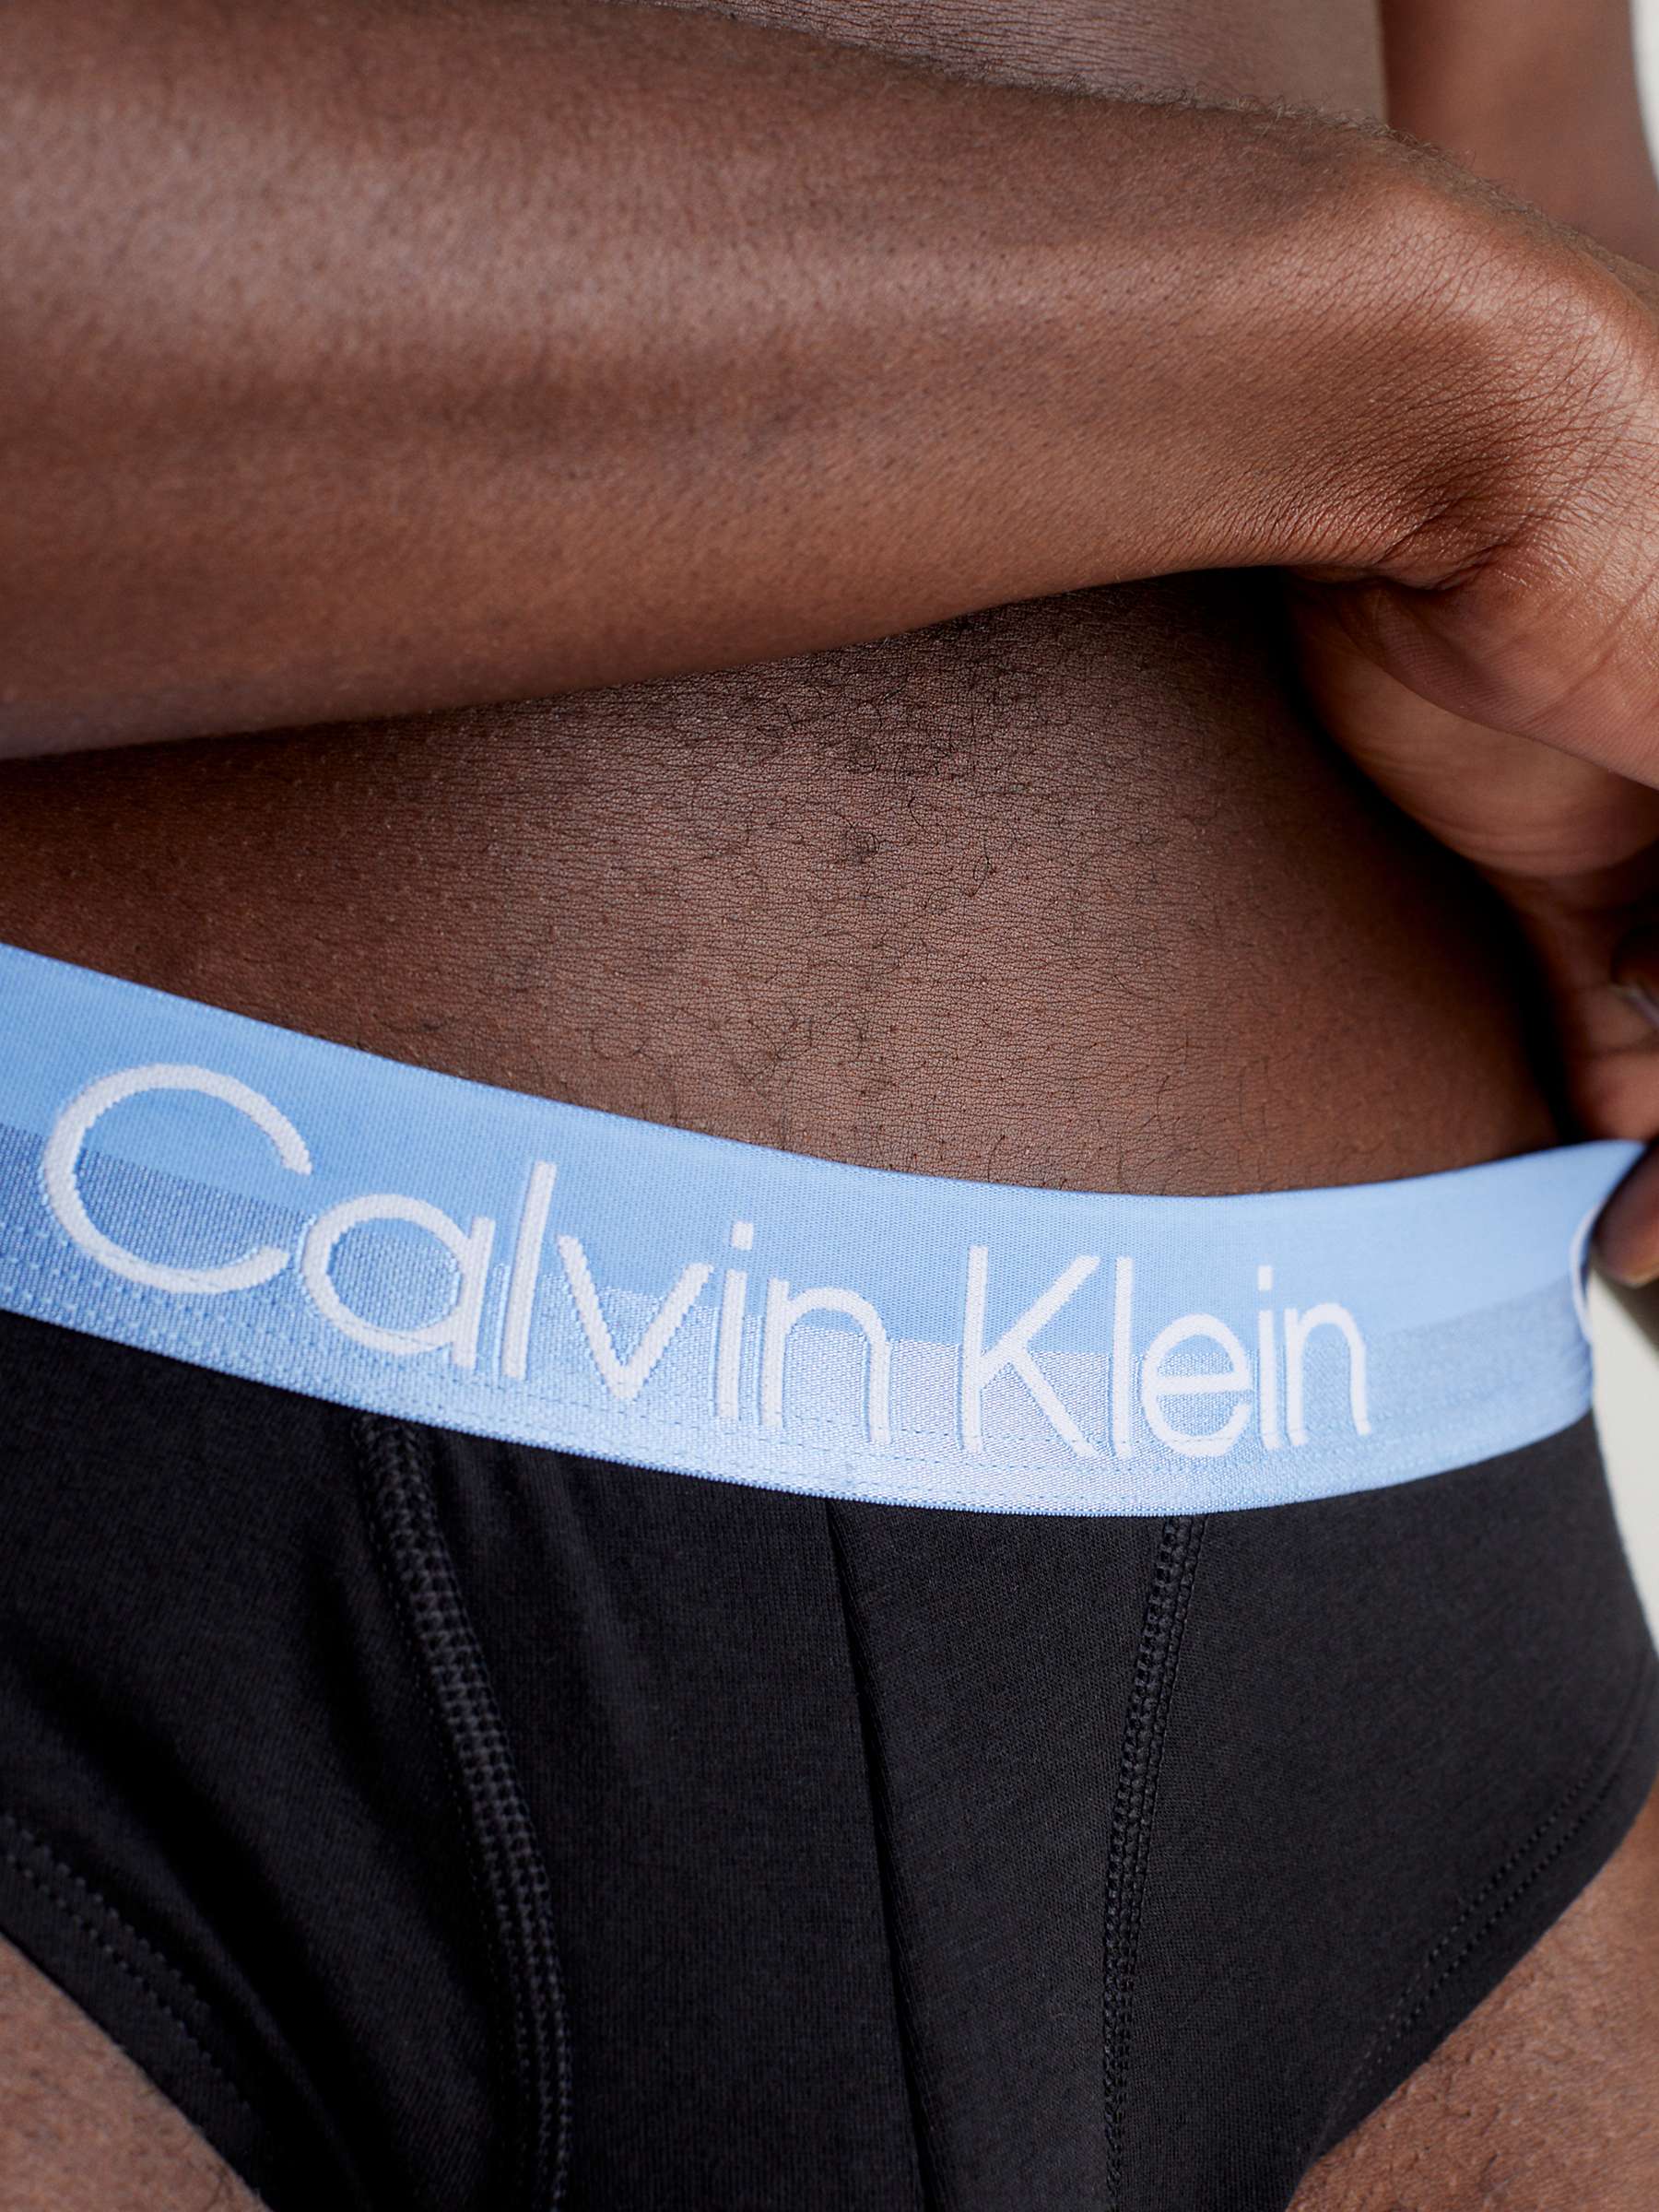 Buy Calvin Klein Hip Briefs, Pack of 3, Griffin/Blue/Black Online at johnlewis.com